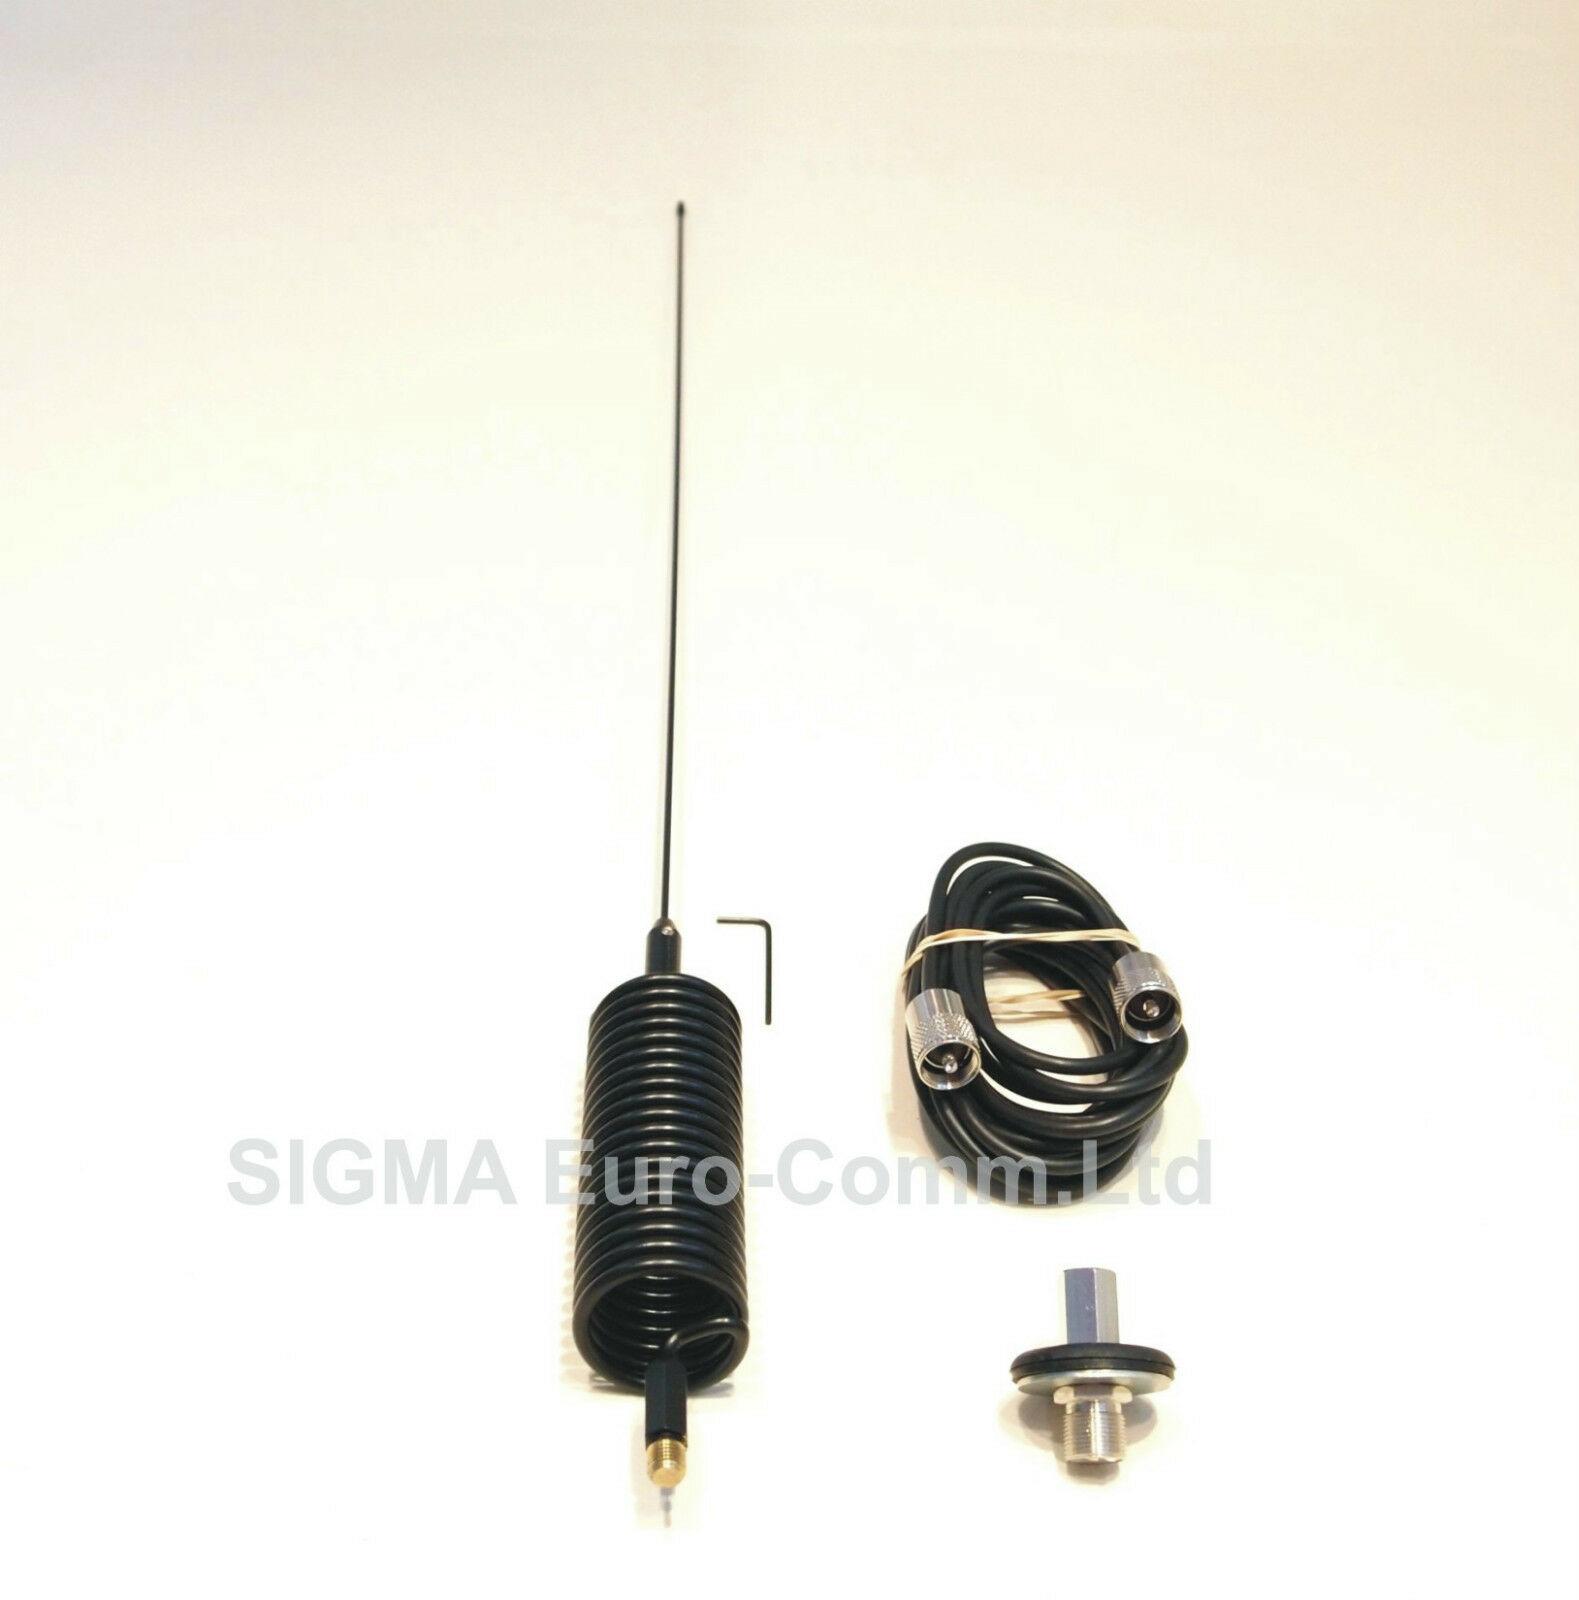 Sigma Mini Springer Stinger CB Antenna+Large Washer Body Mounting Kit CB Radio Aerial